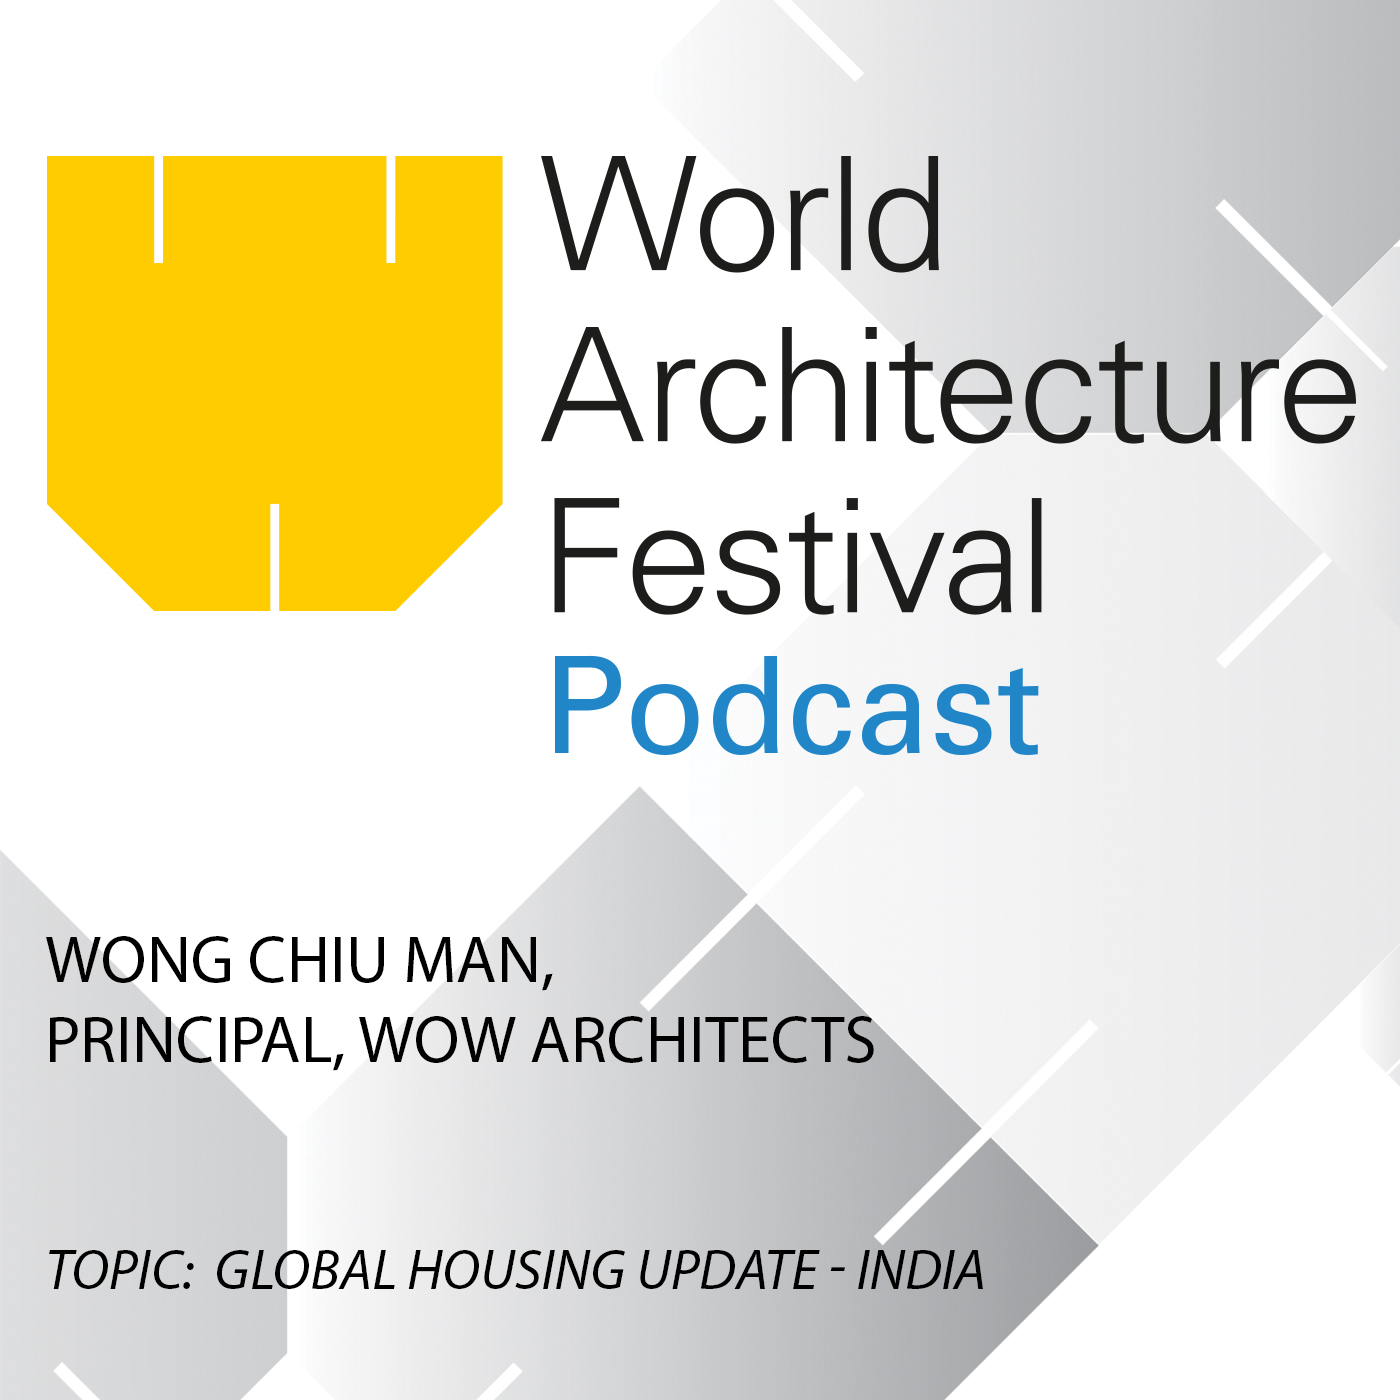 WAF Podcast: Wong Chiu Man, Principal, Wow Architects